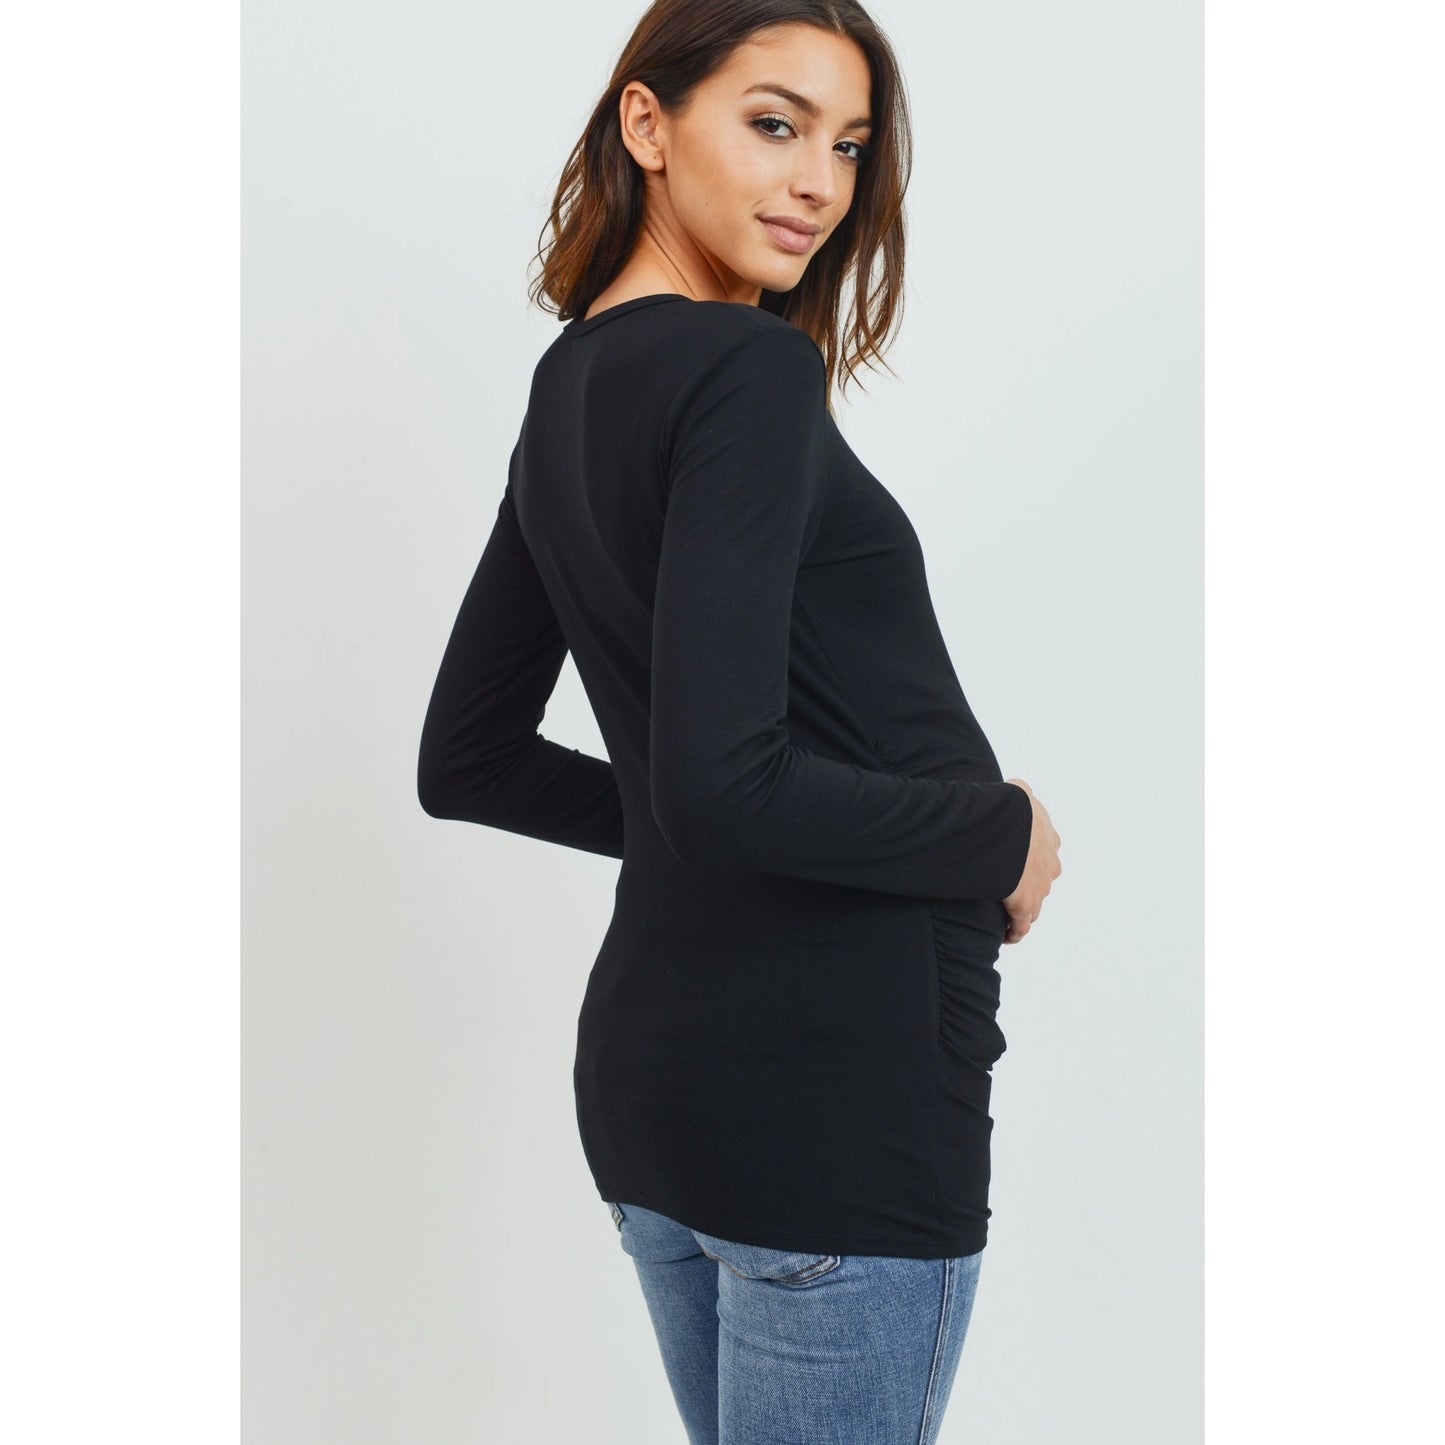 Round Neck Maternity Top (Black)